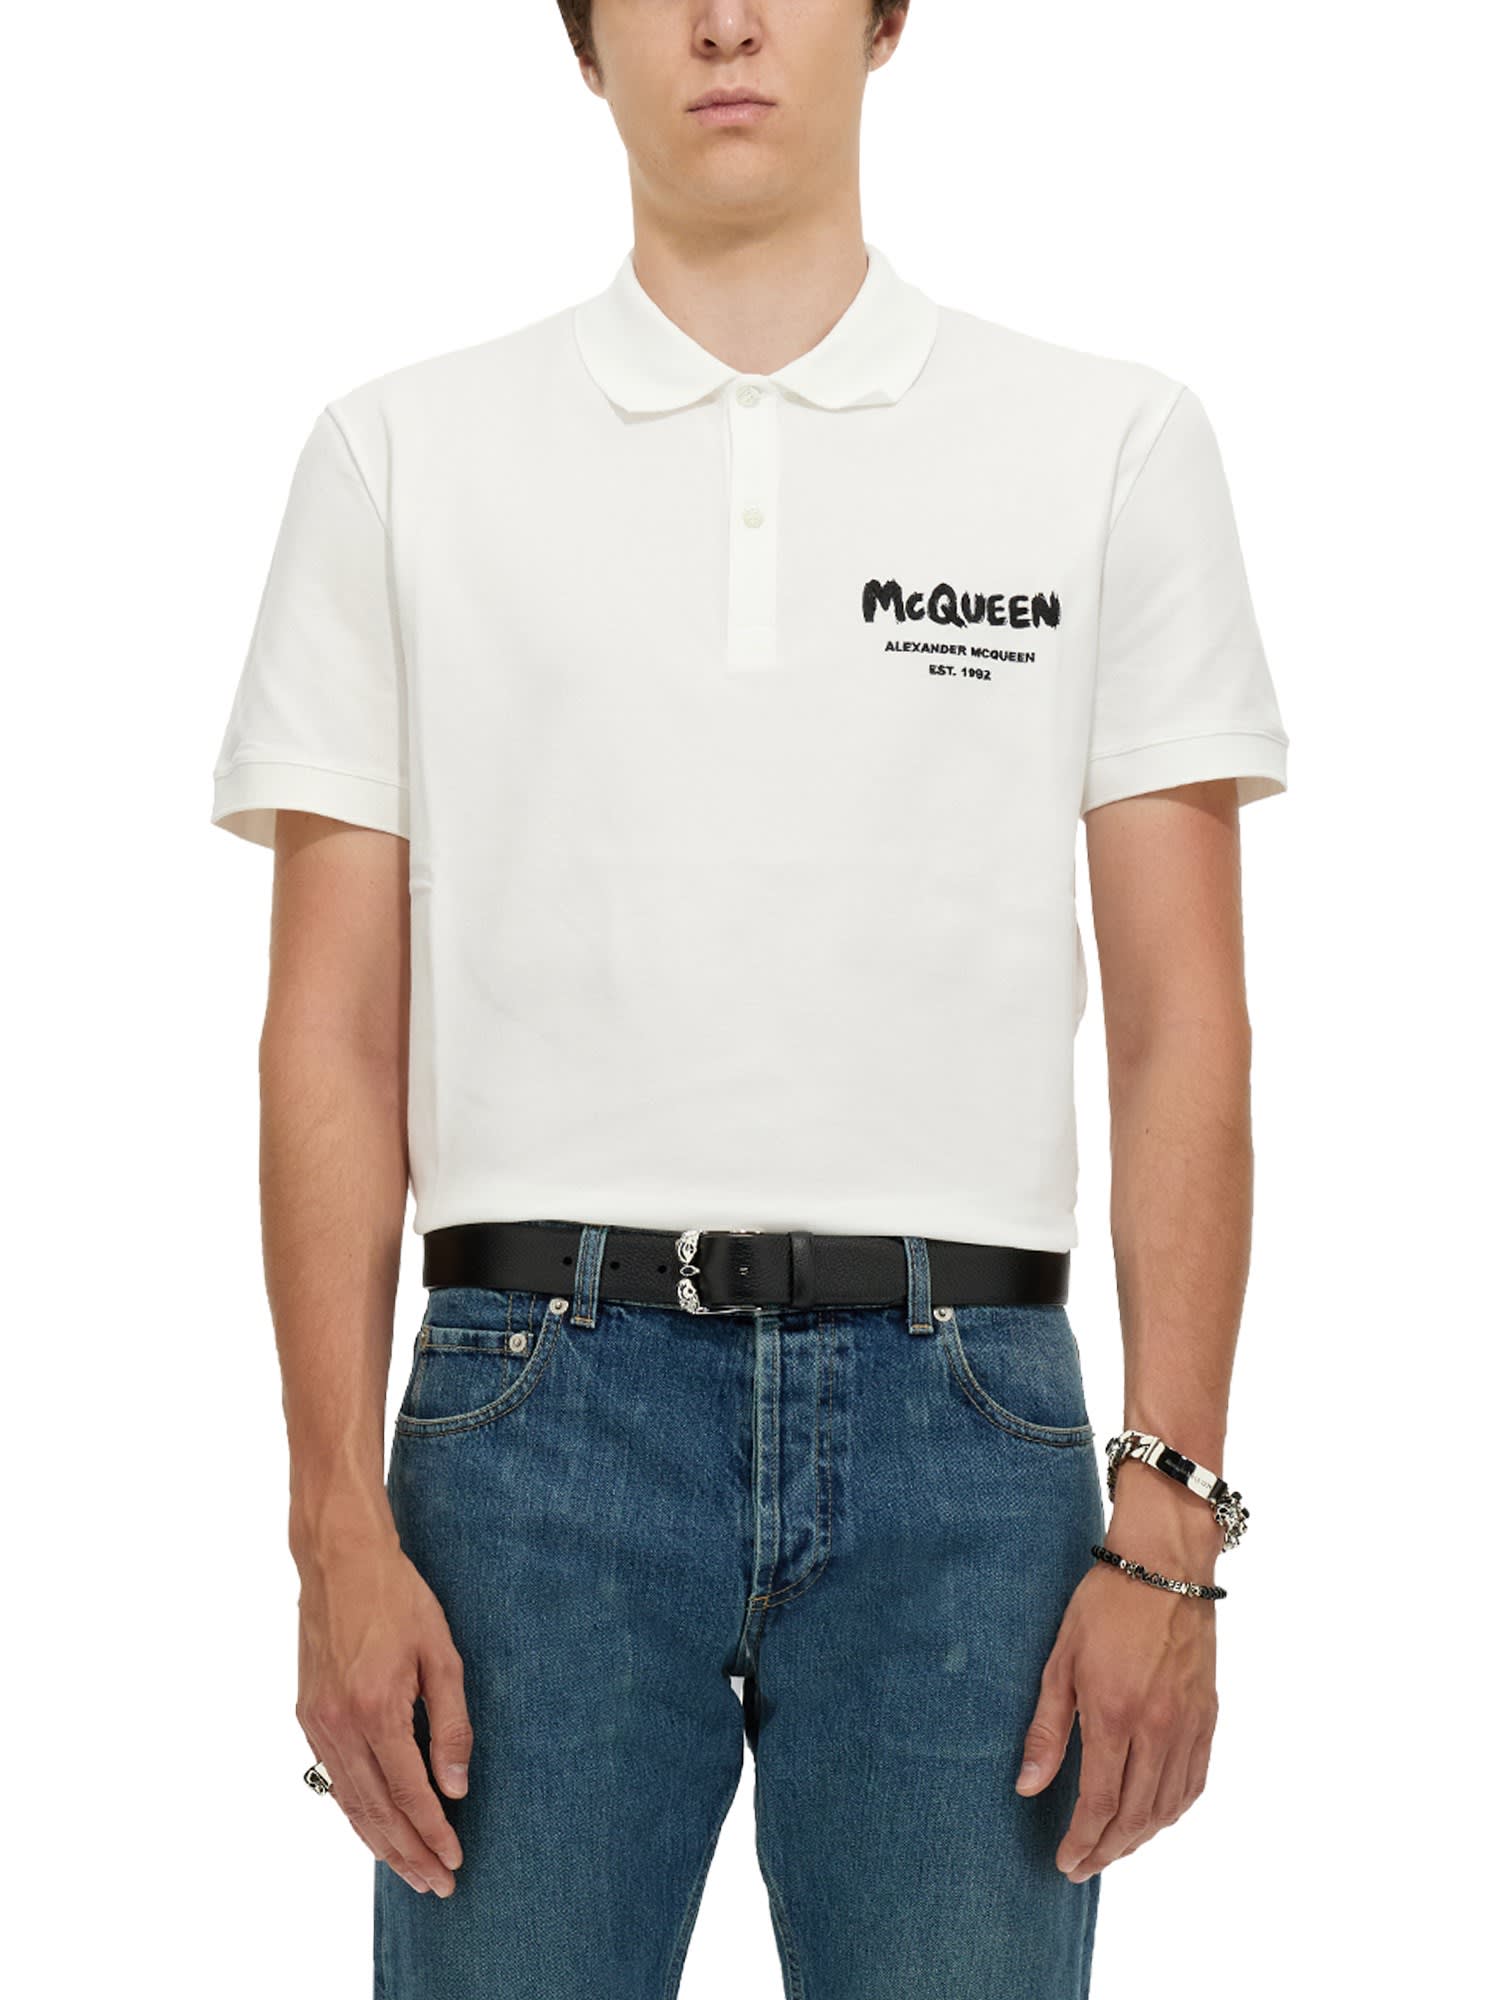 Alexander McQueen Men's Logo Tape Harness Polo Shirt